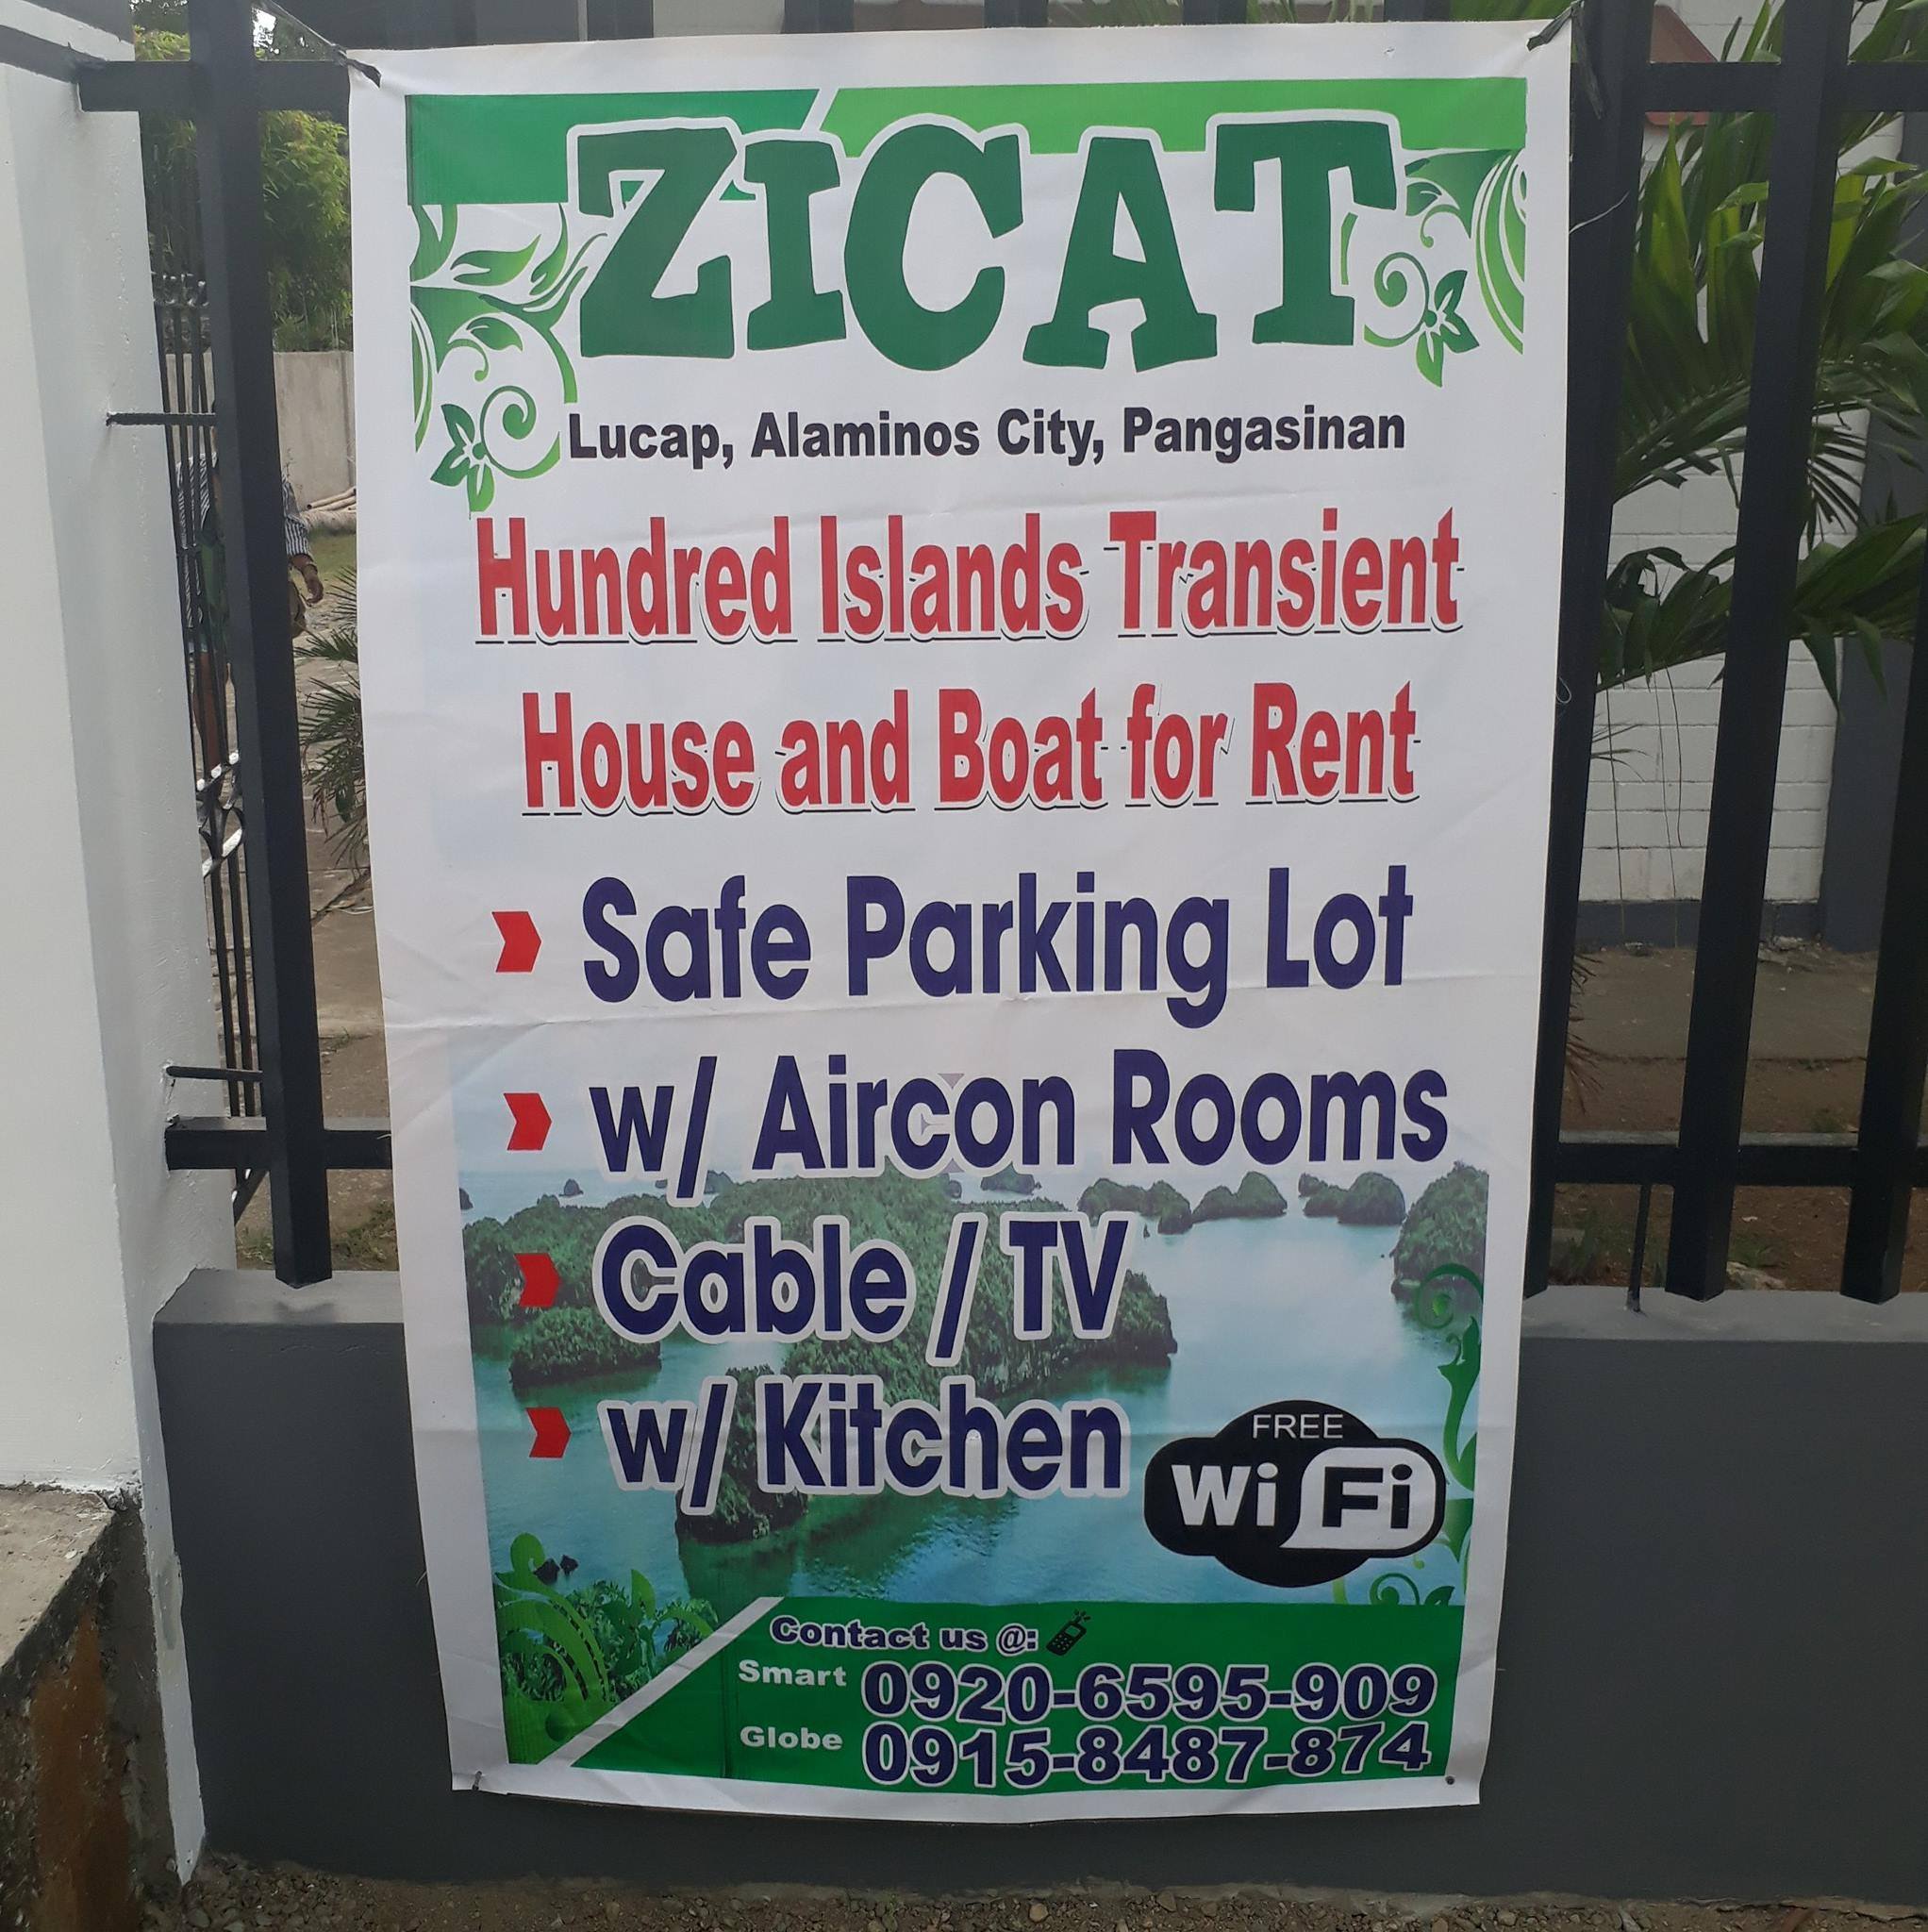 Zicat Hundred Islands Transient Rooms LOGO